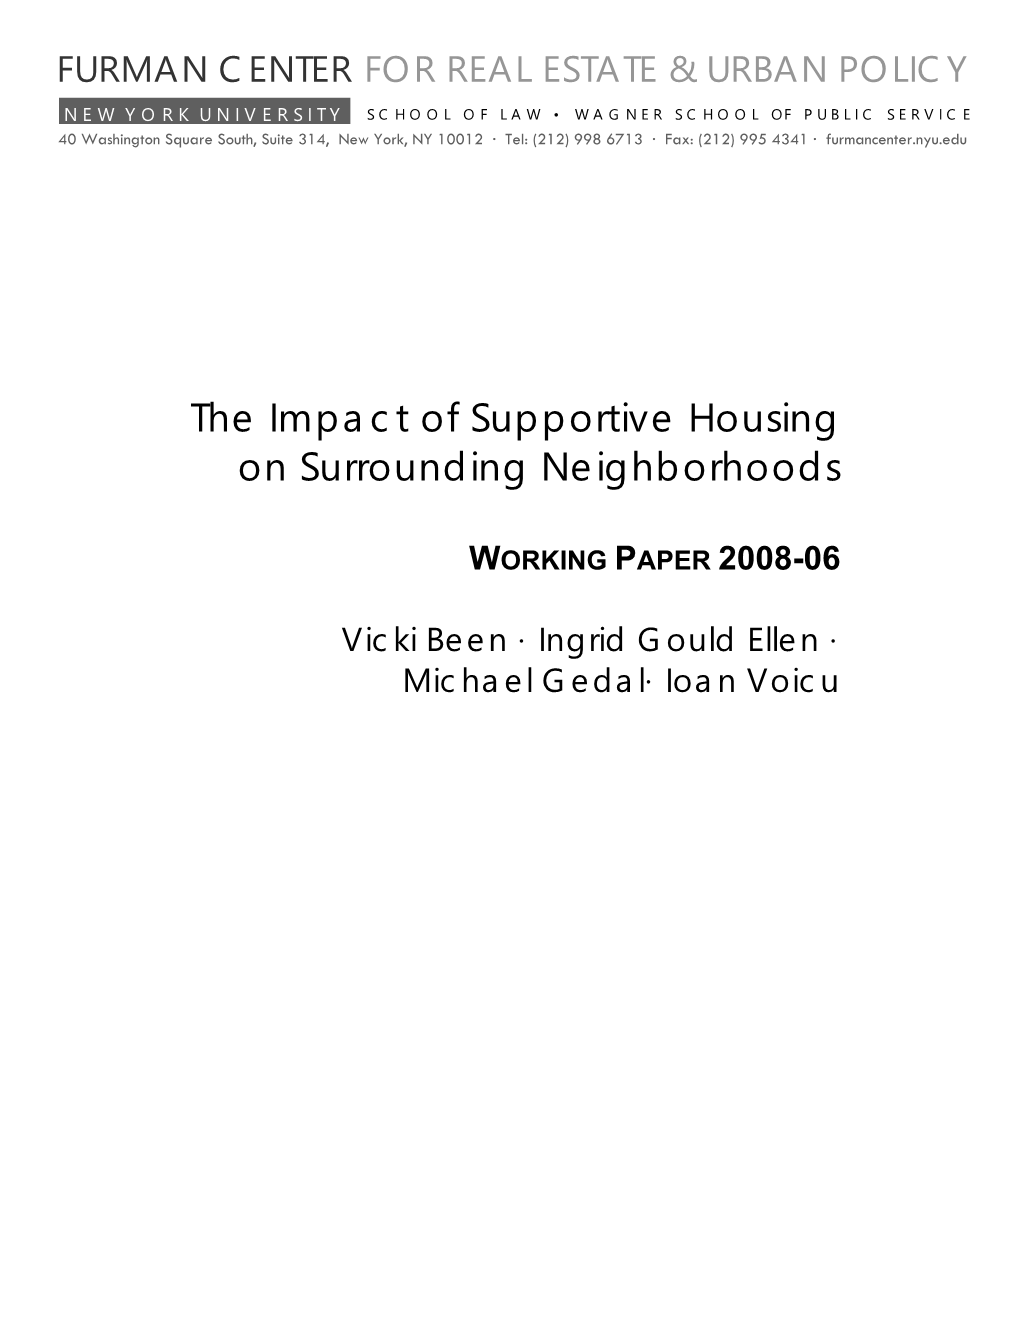 The Impact of Supportive Housing on Surrounding Neighborhoods